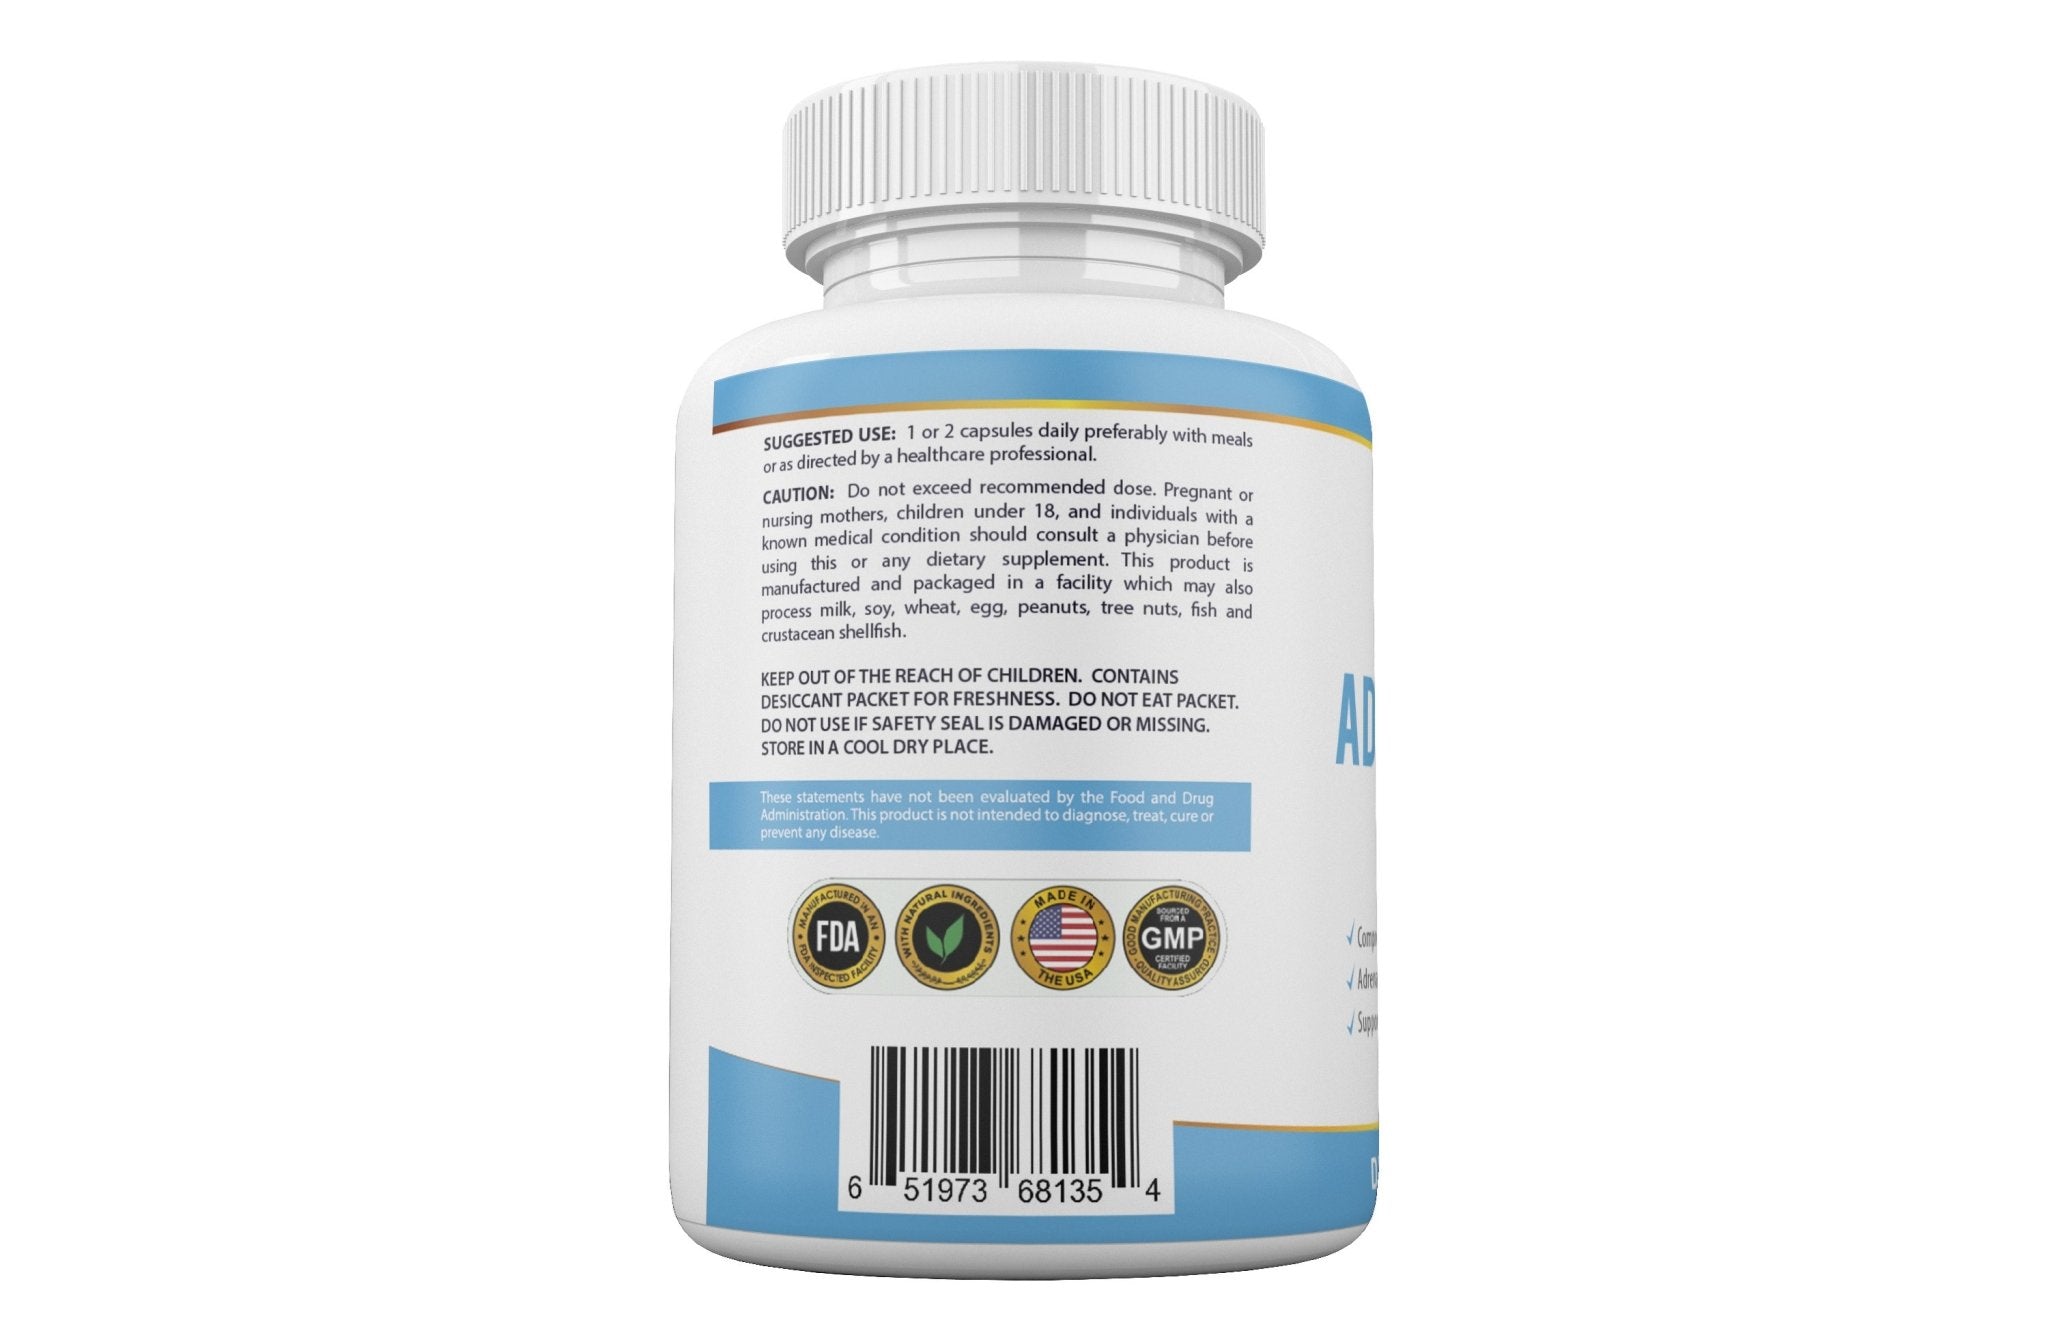 Adrenal Complex Pro Health by Qivaro - 60 capsules - Qivaro USA